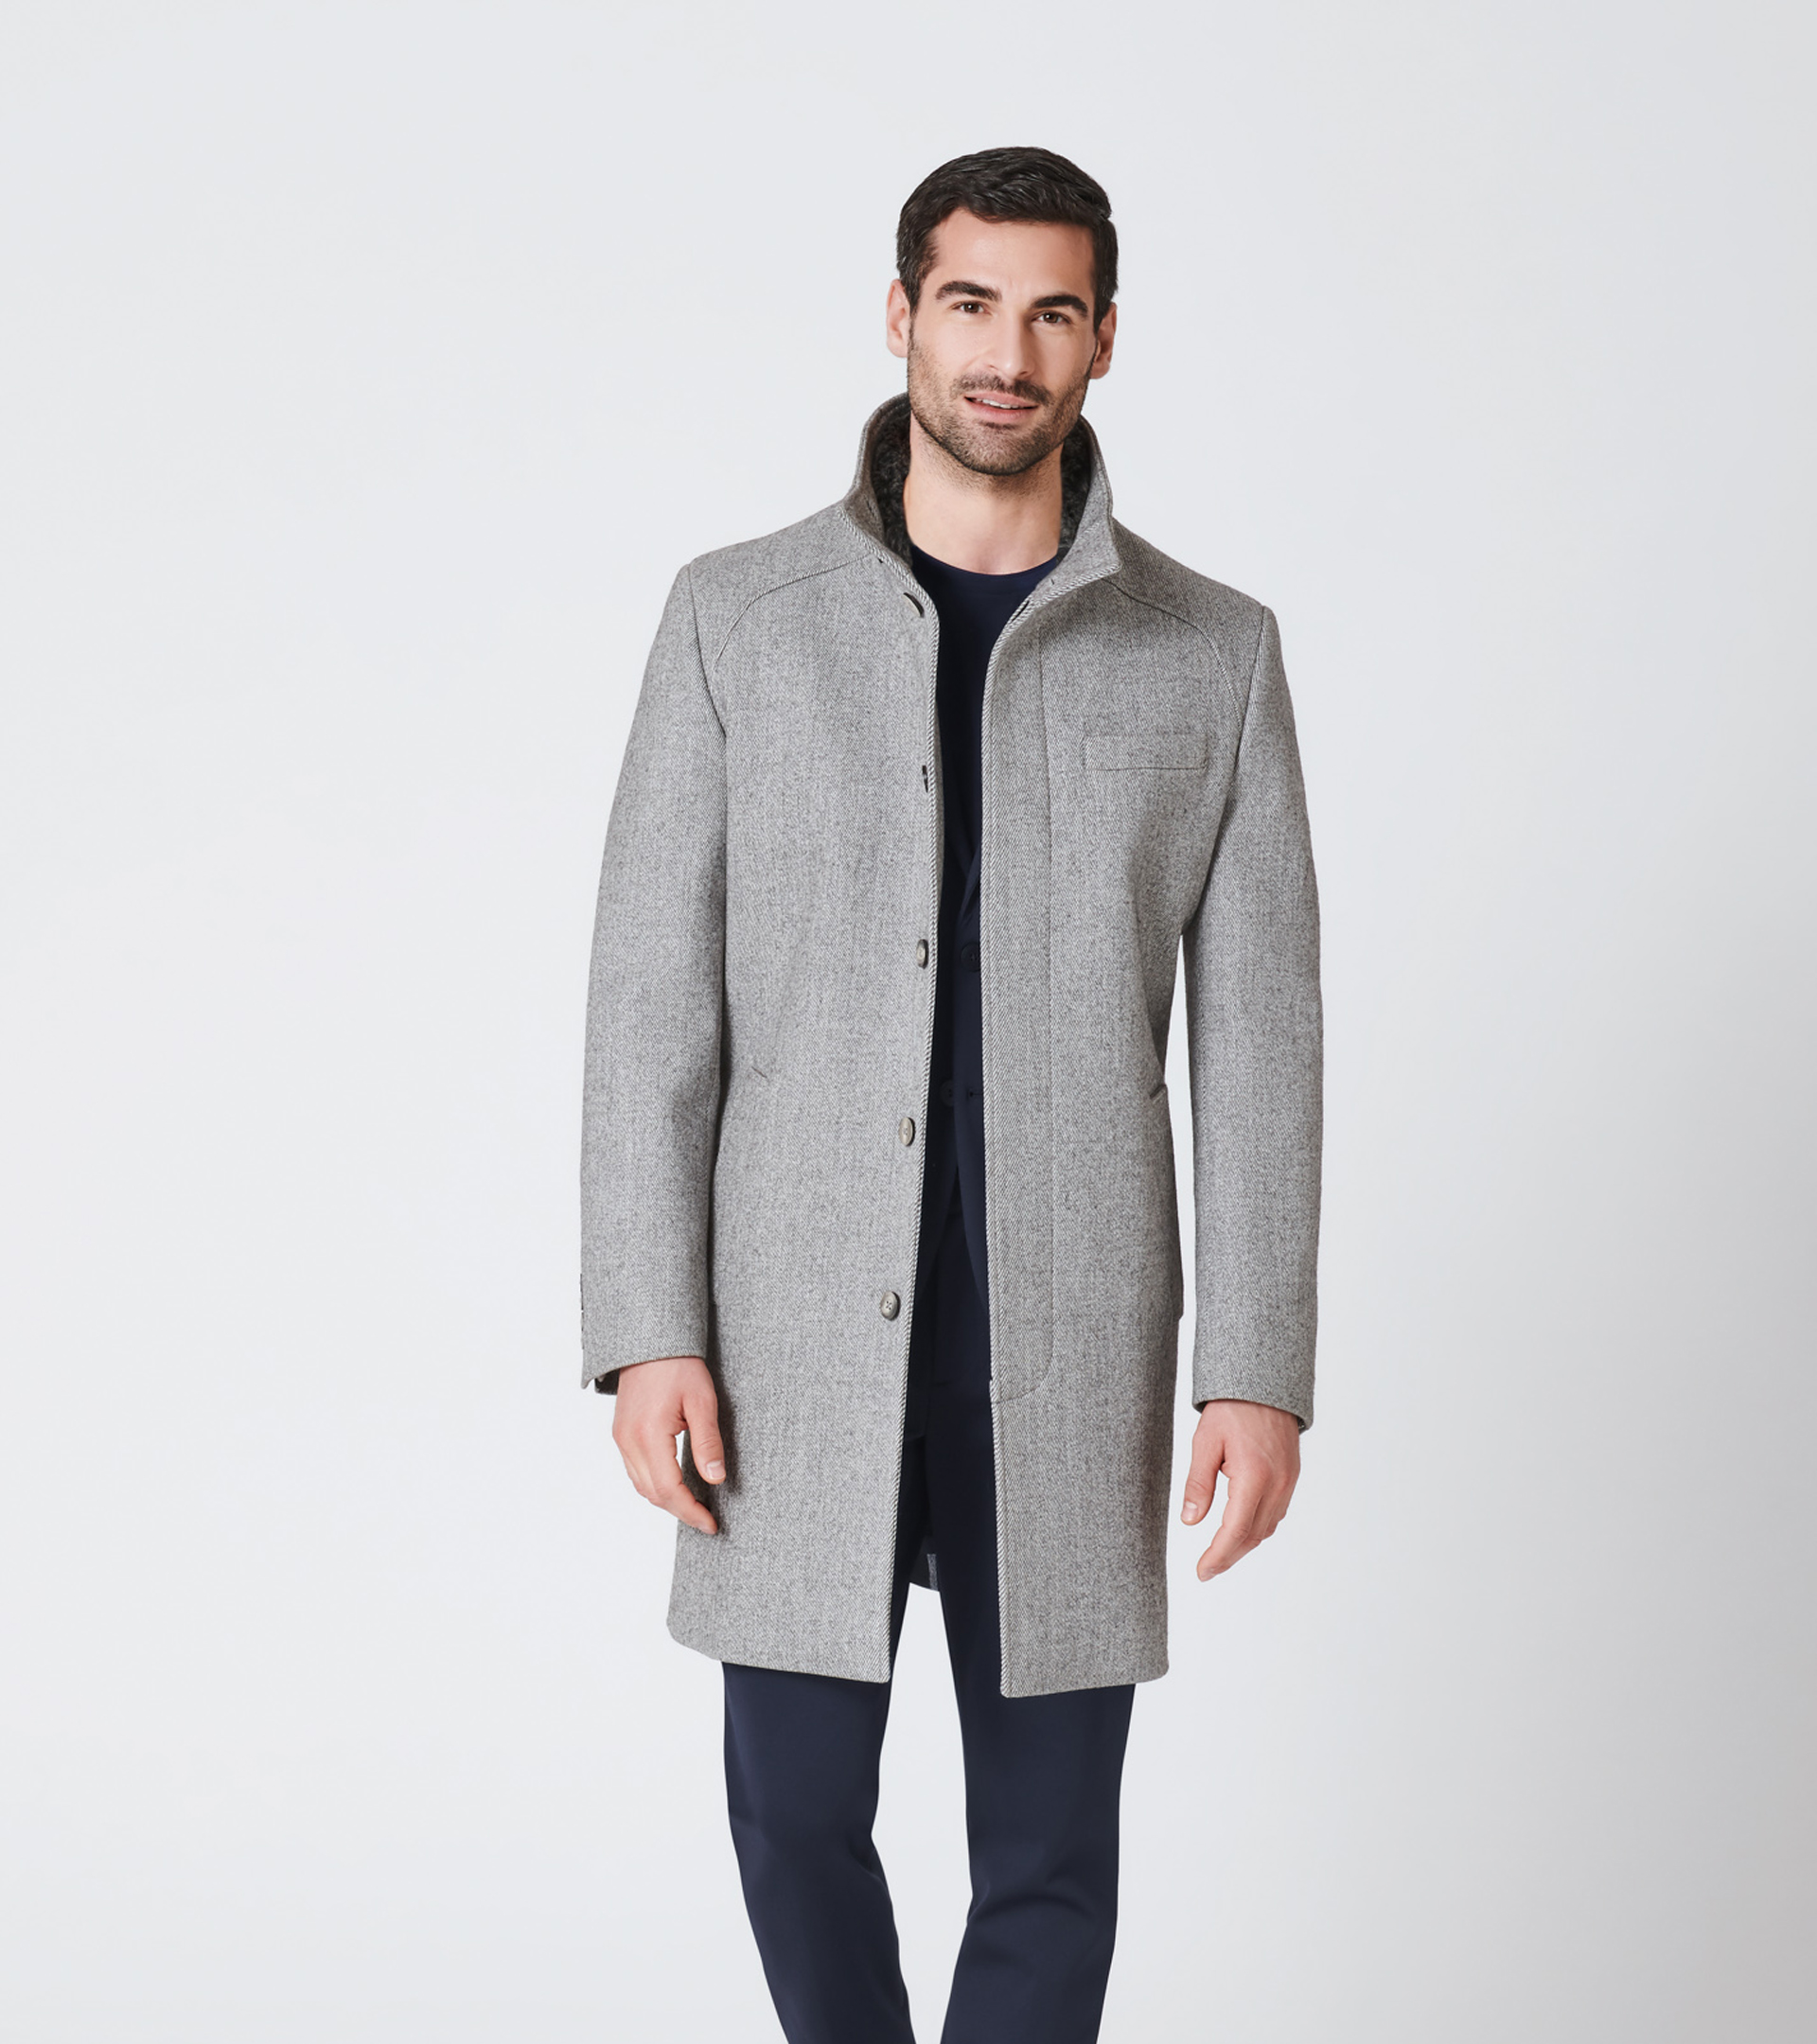 SPE969 Mens Stand Collar Long Jacket,Warm Vintage Tailcoat Jacket Overcoat Design Velour Outwear Buttons Coat 